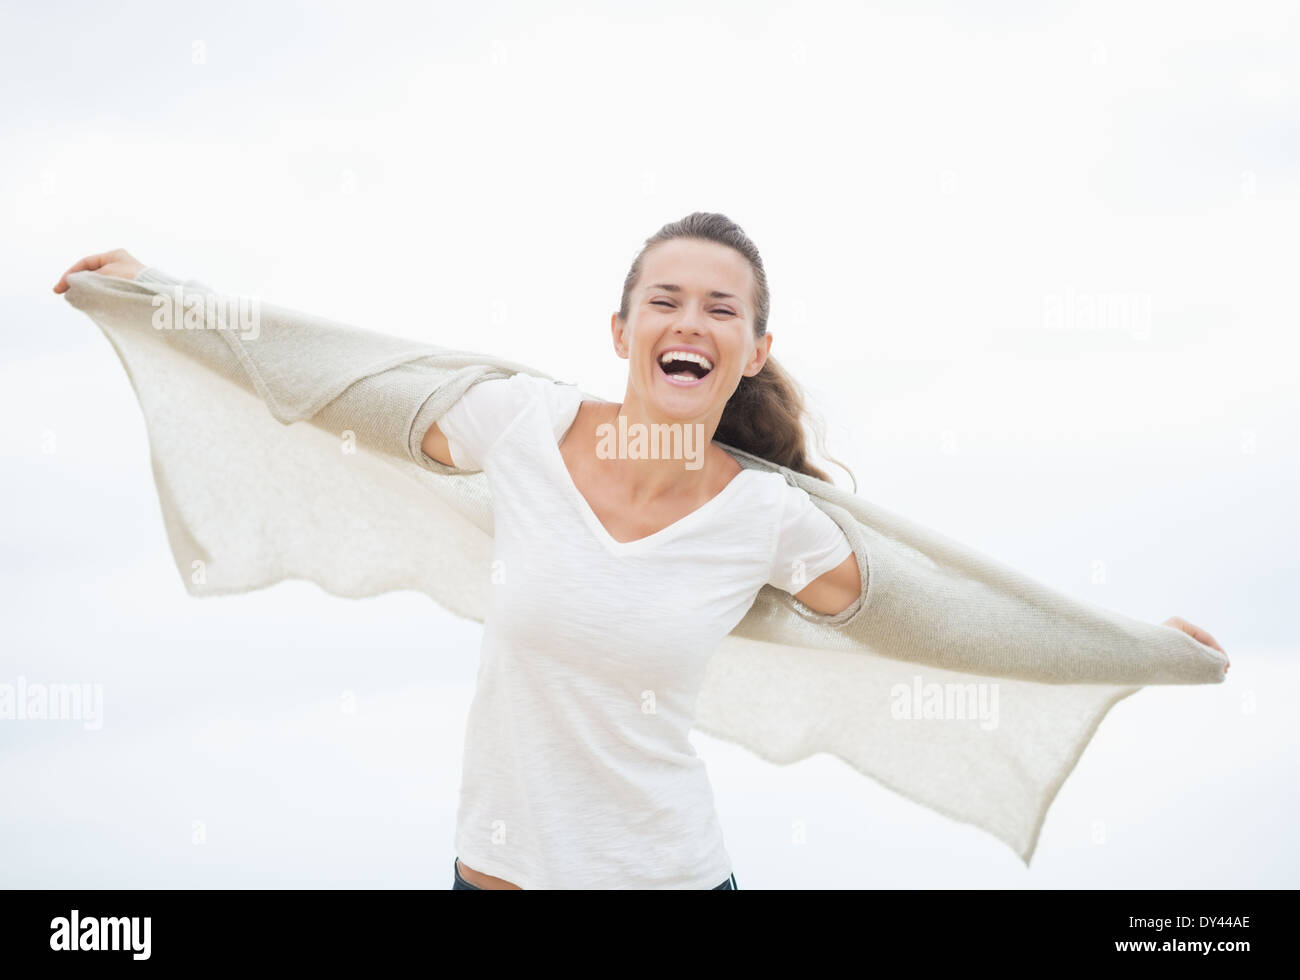 Happy young woman on beach froide réjouissance Banque D'Images